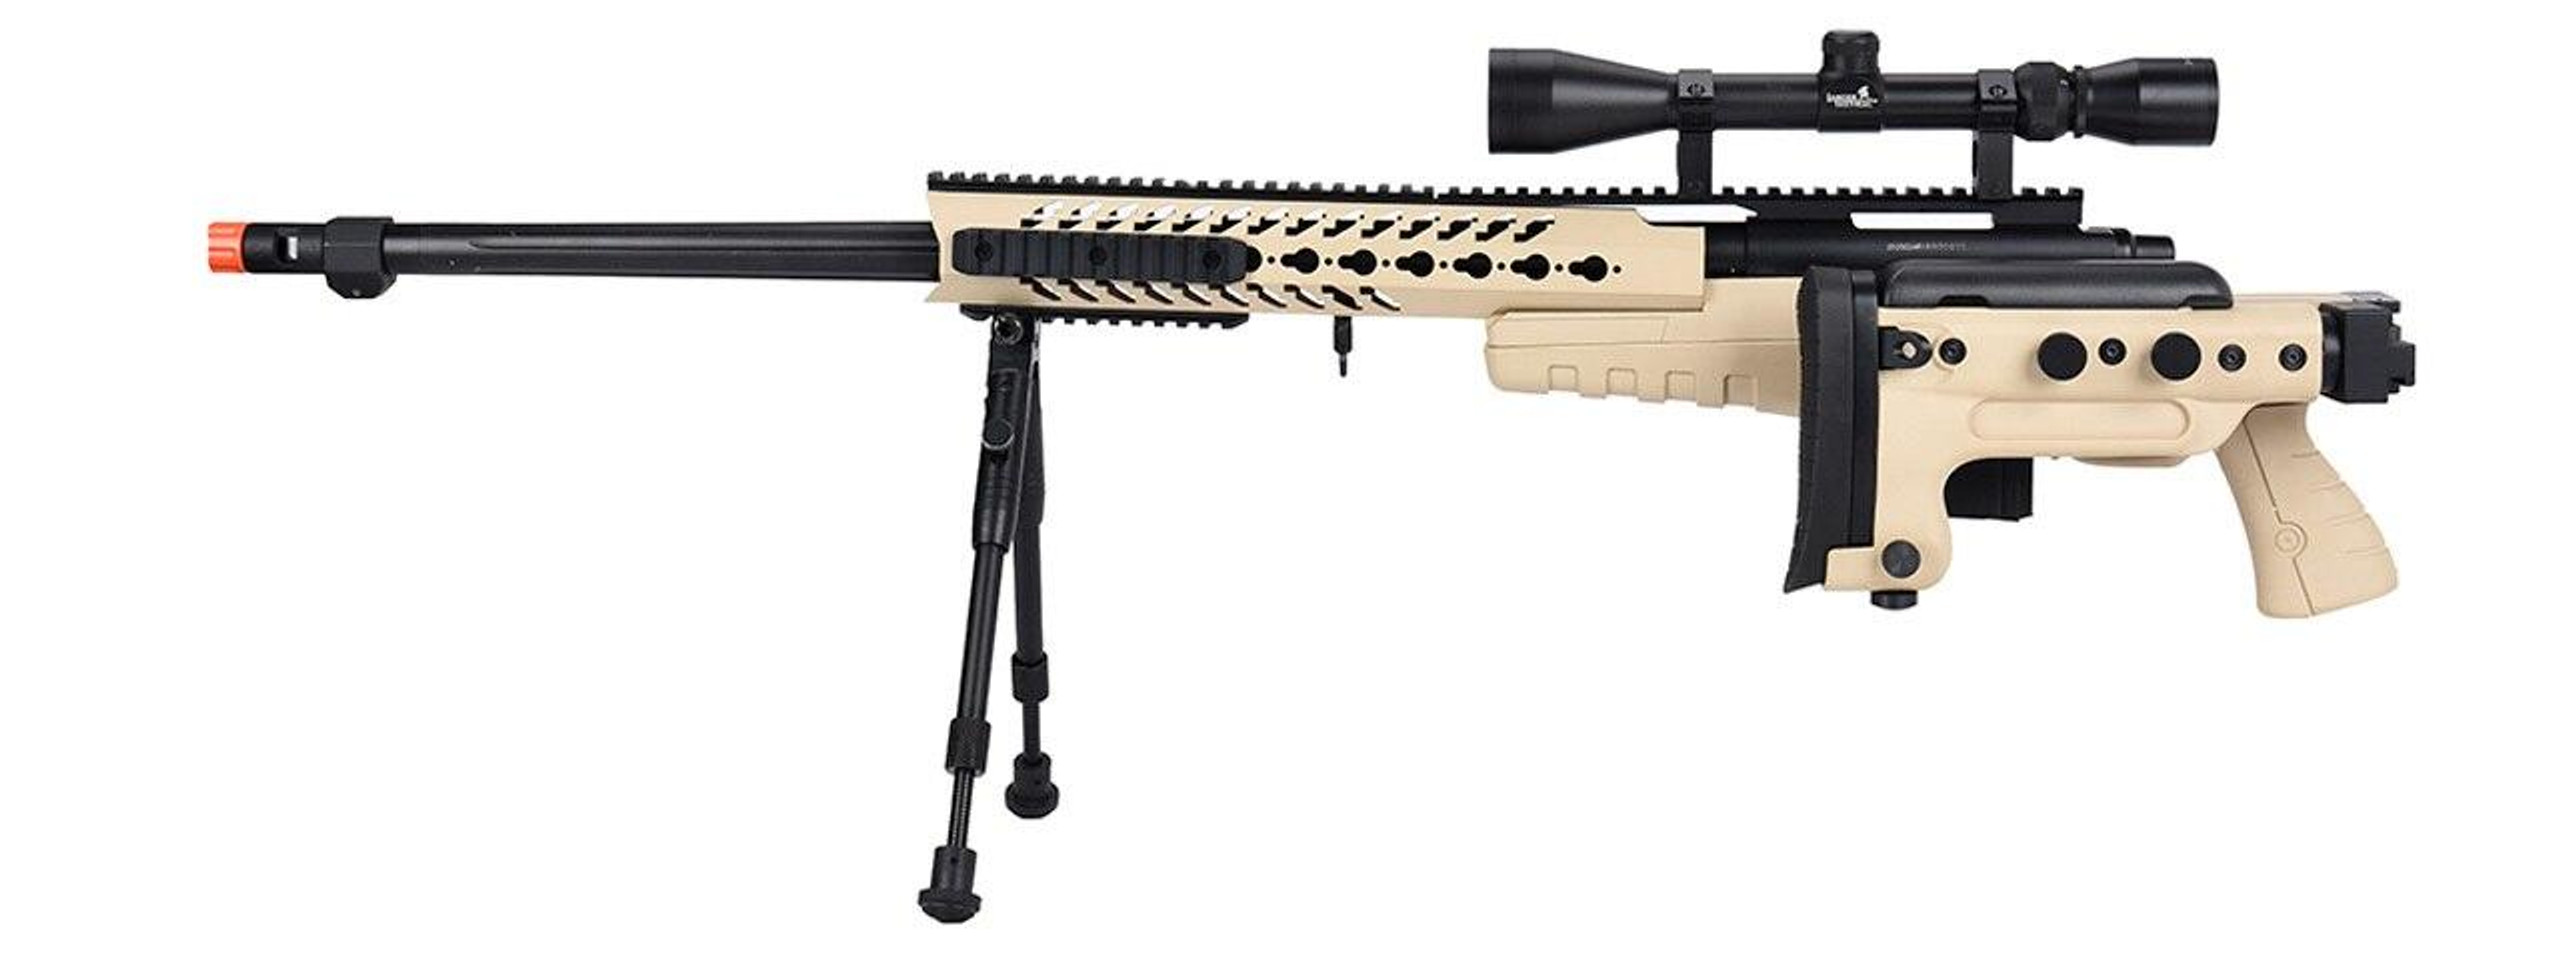 WellFire MB4418-3 Bolt Action Airsoft Sniper Rifle w/ Scope & Bipod, Tan